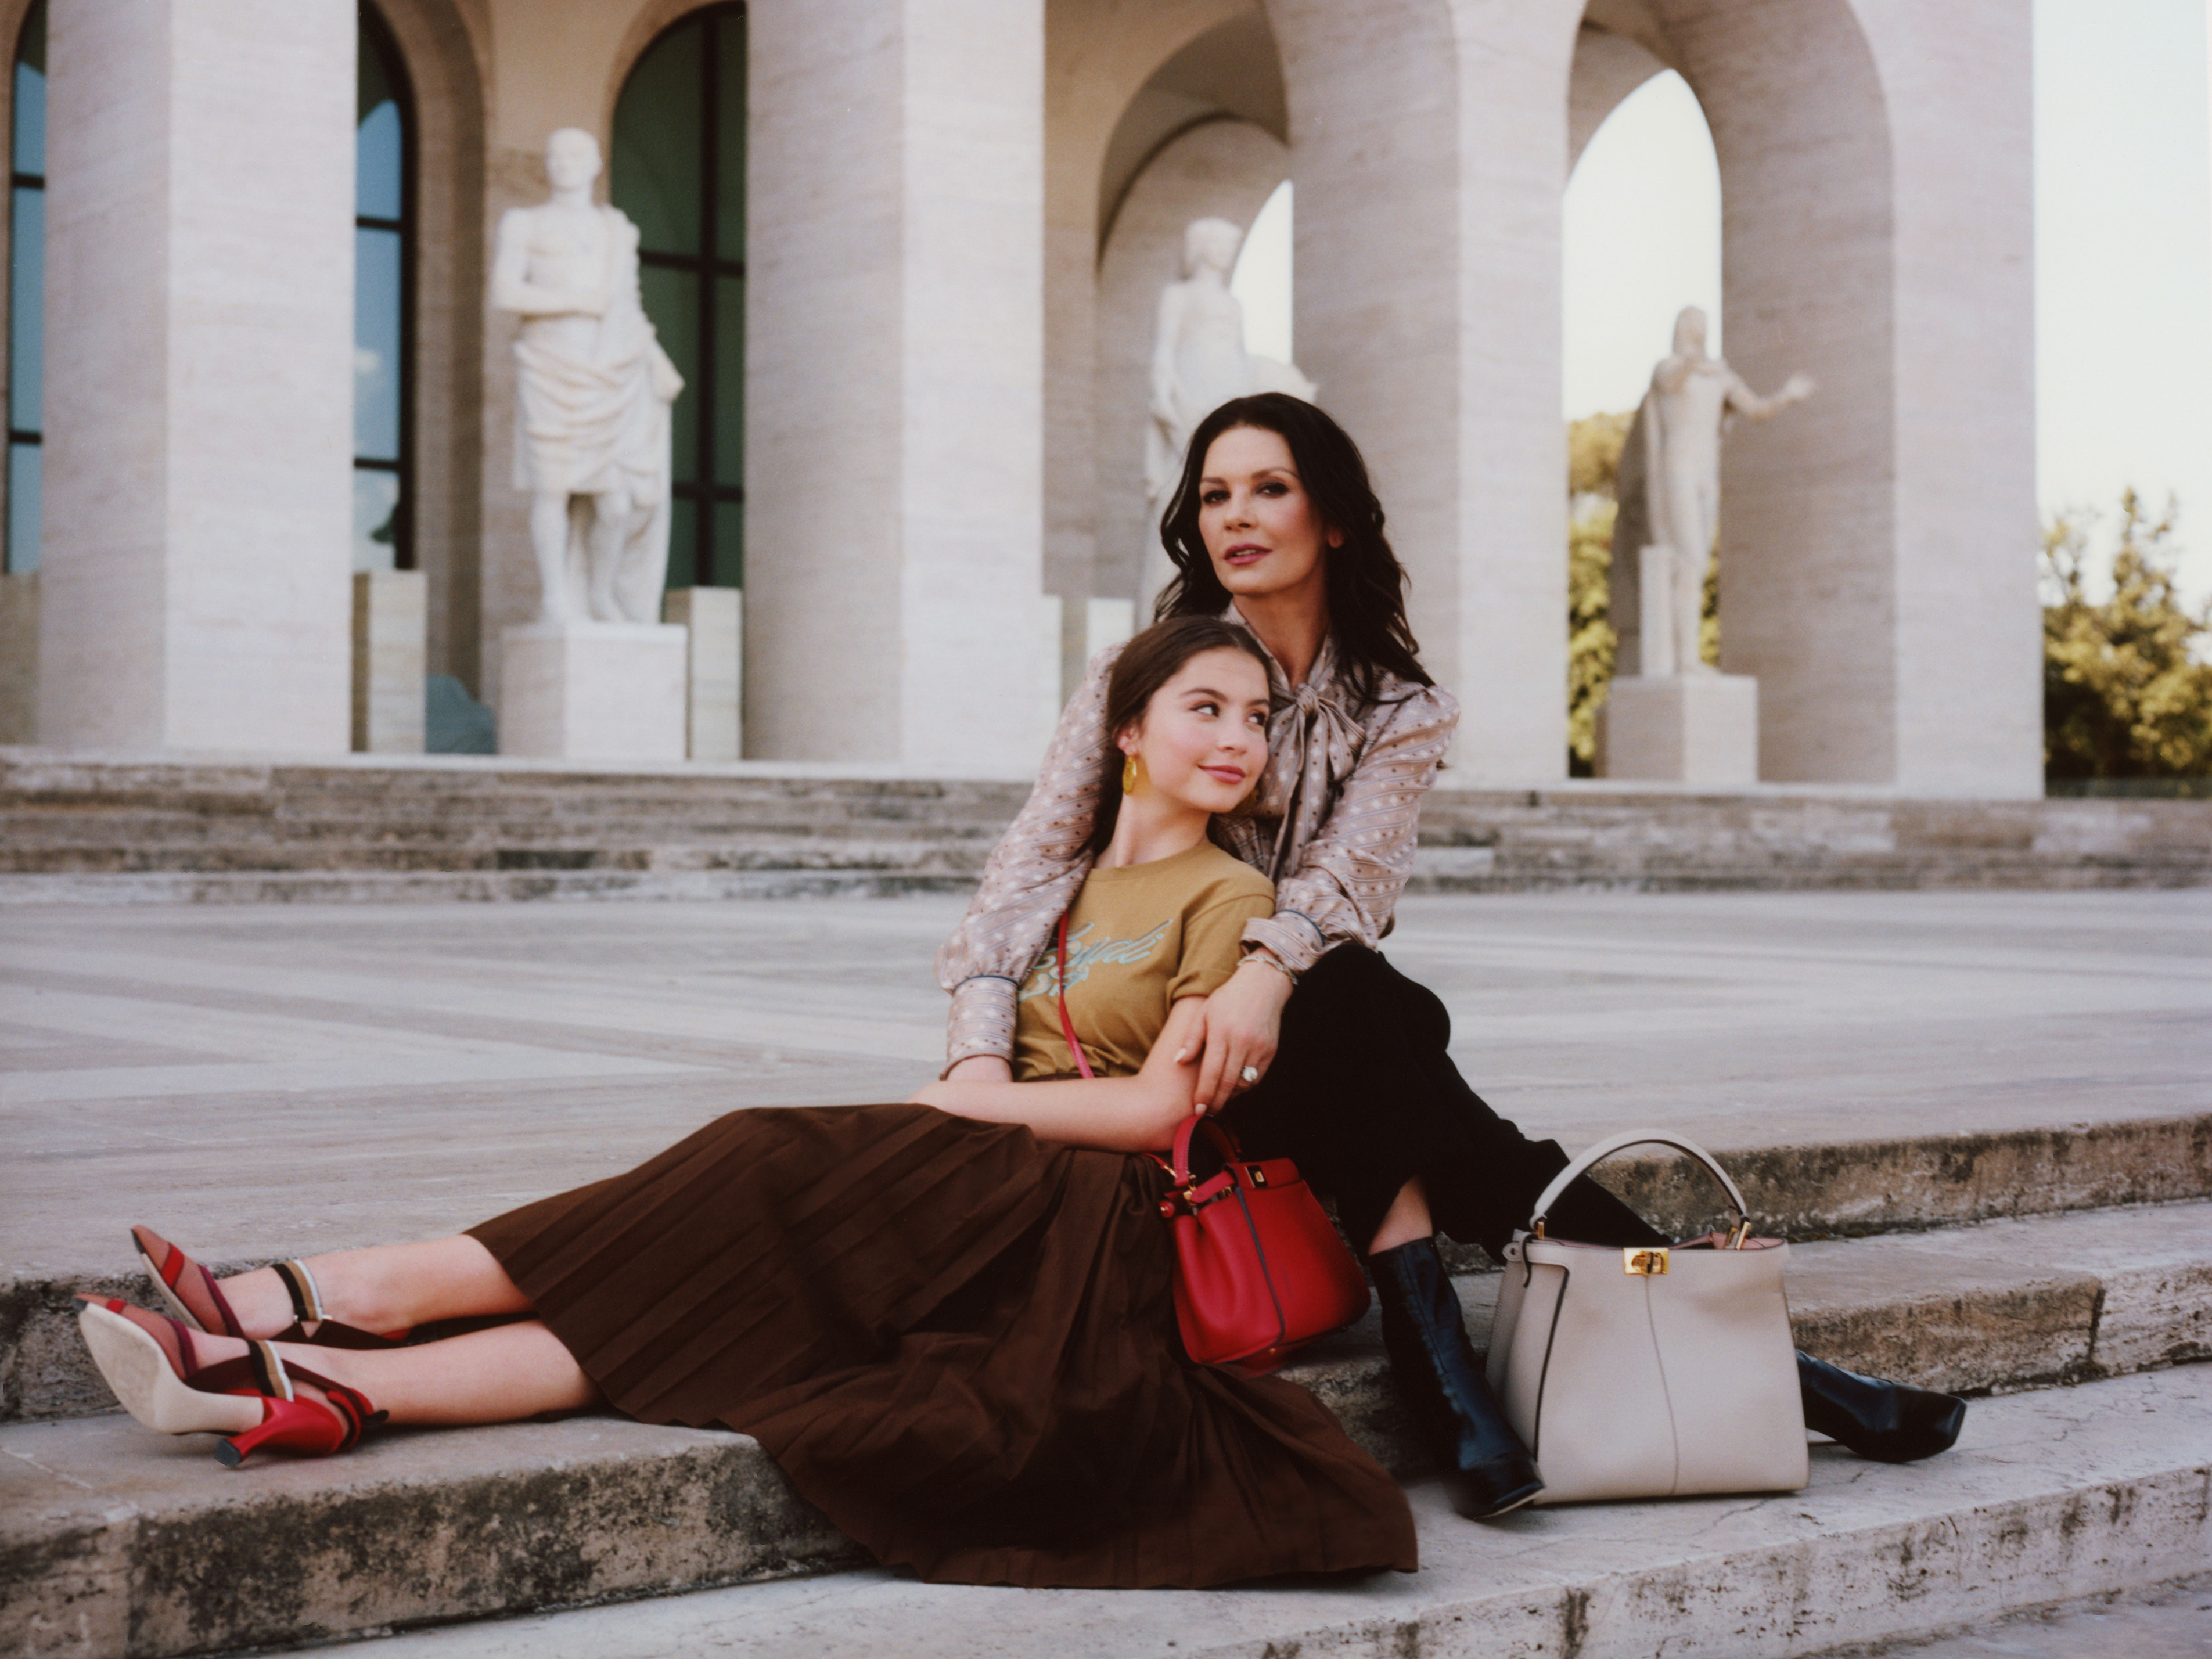 Fendi Peekaboo Bag Campaign With Catherine Zeta-Jones & Daughter Carys Douglas